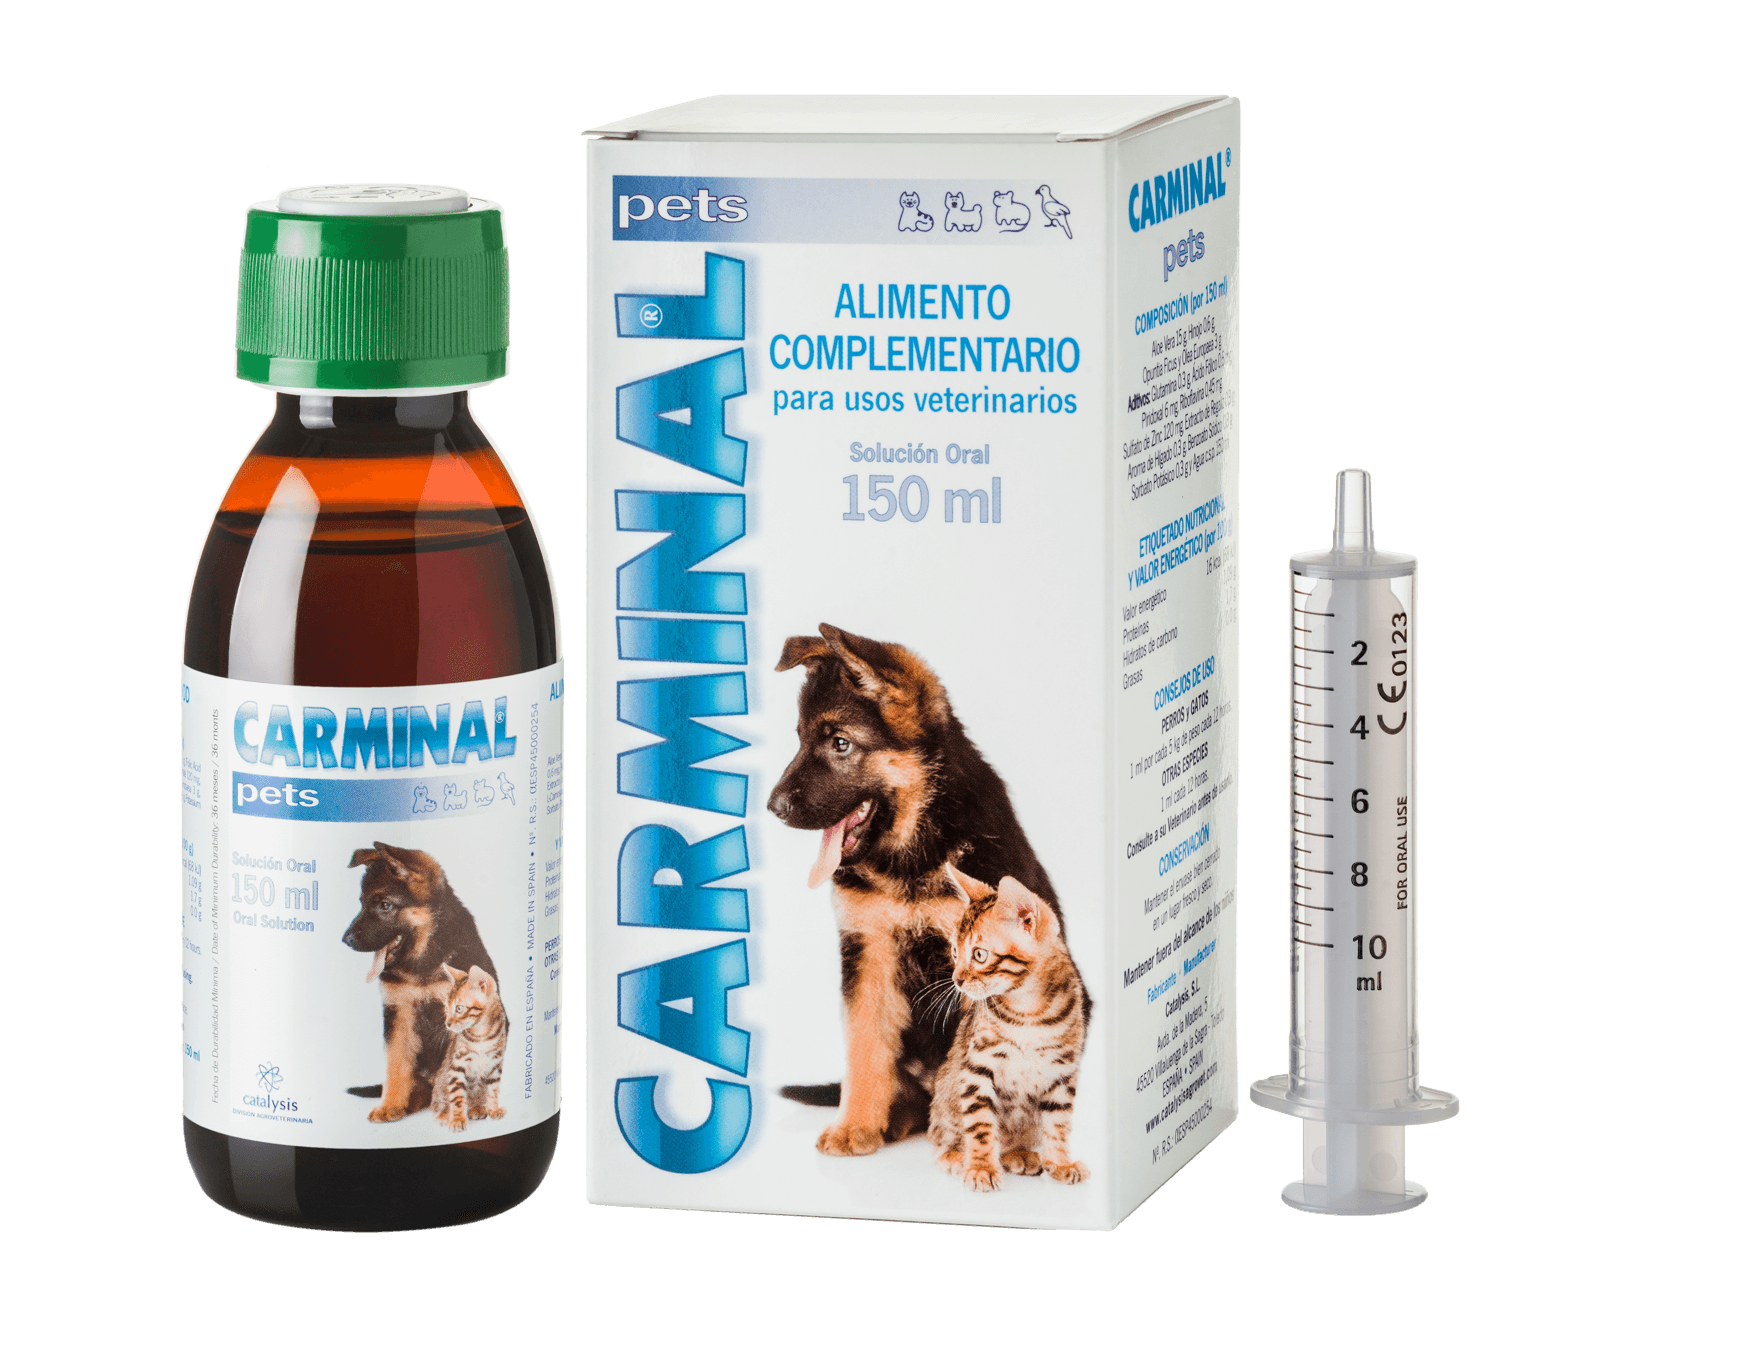 Carminal pets 30ml - AvicMartin Farmacia Veterinaria 